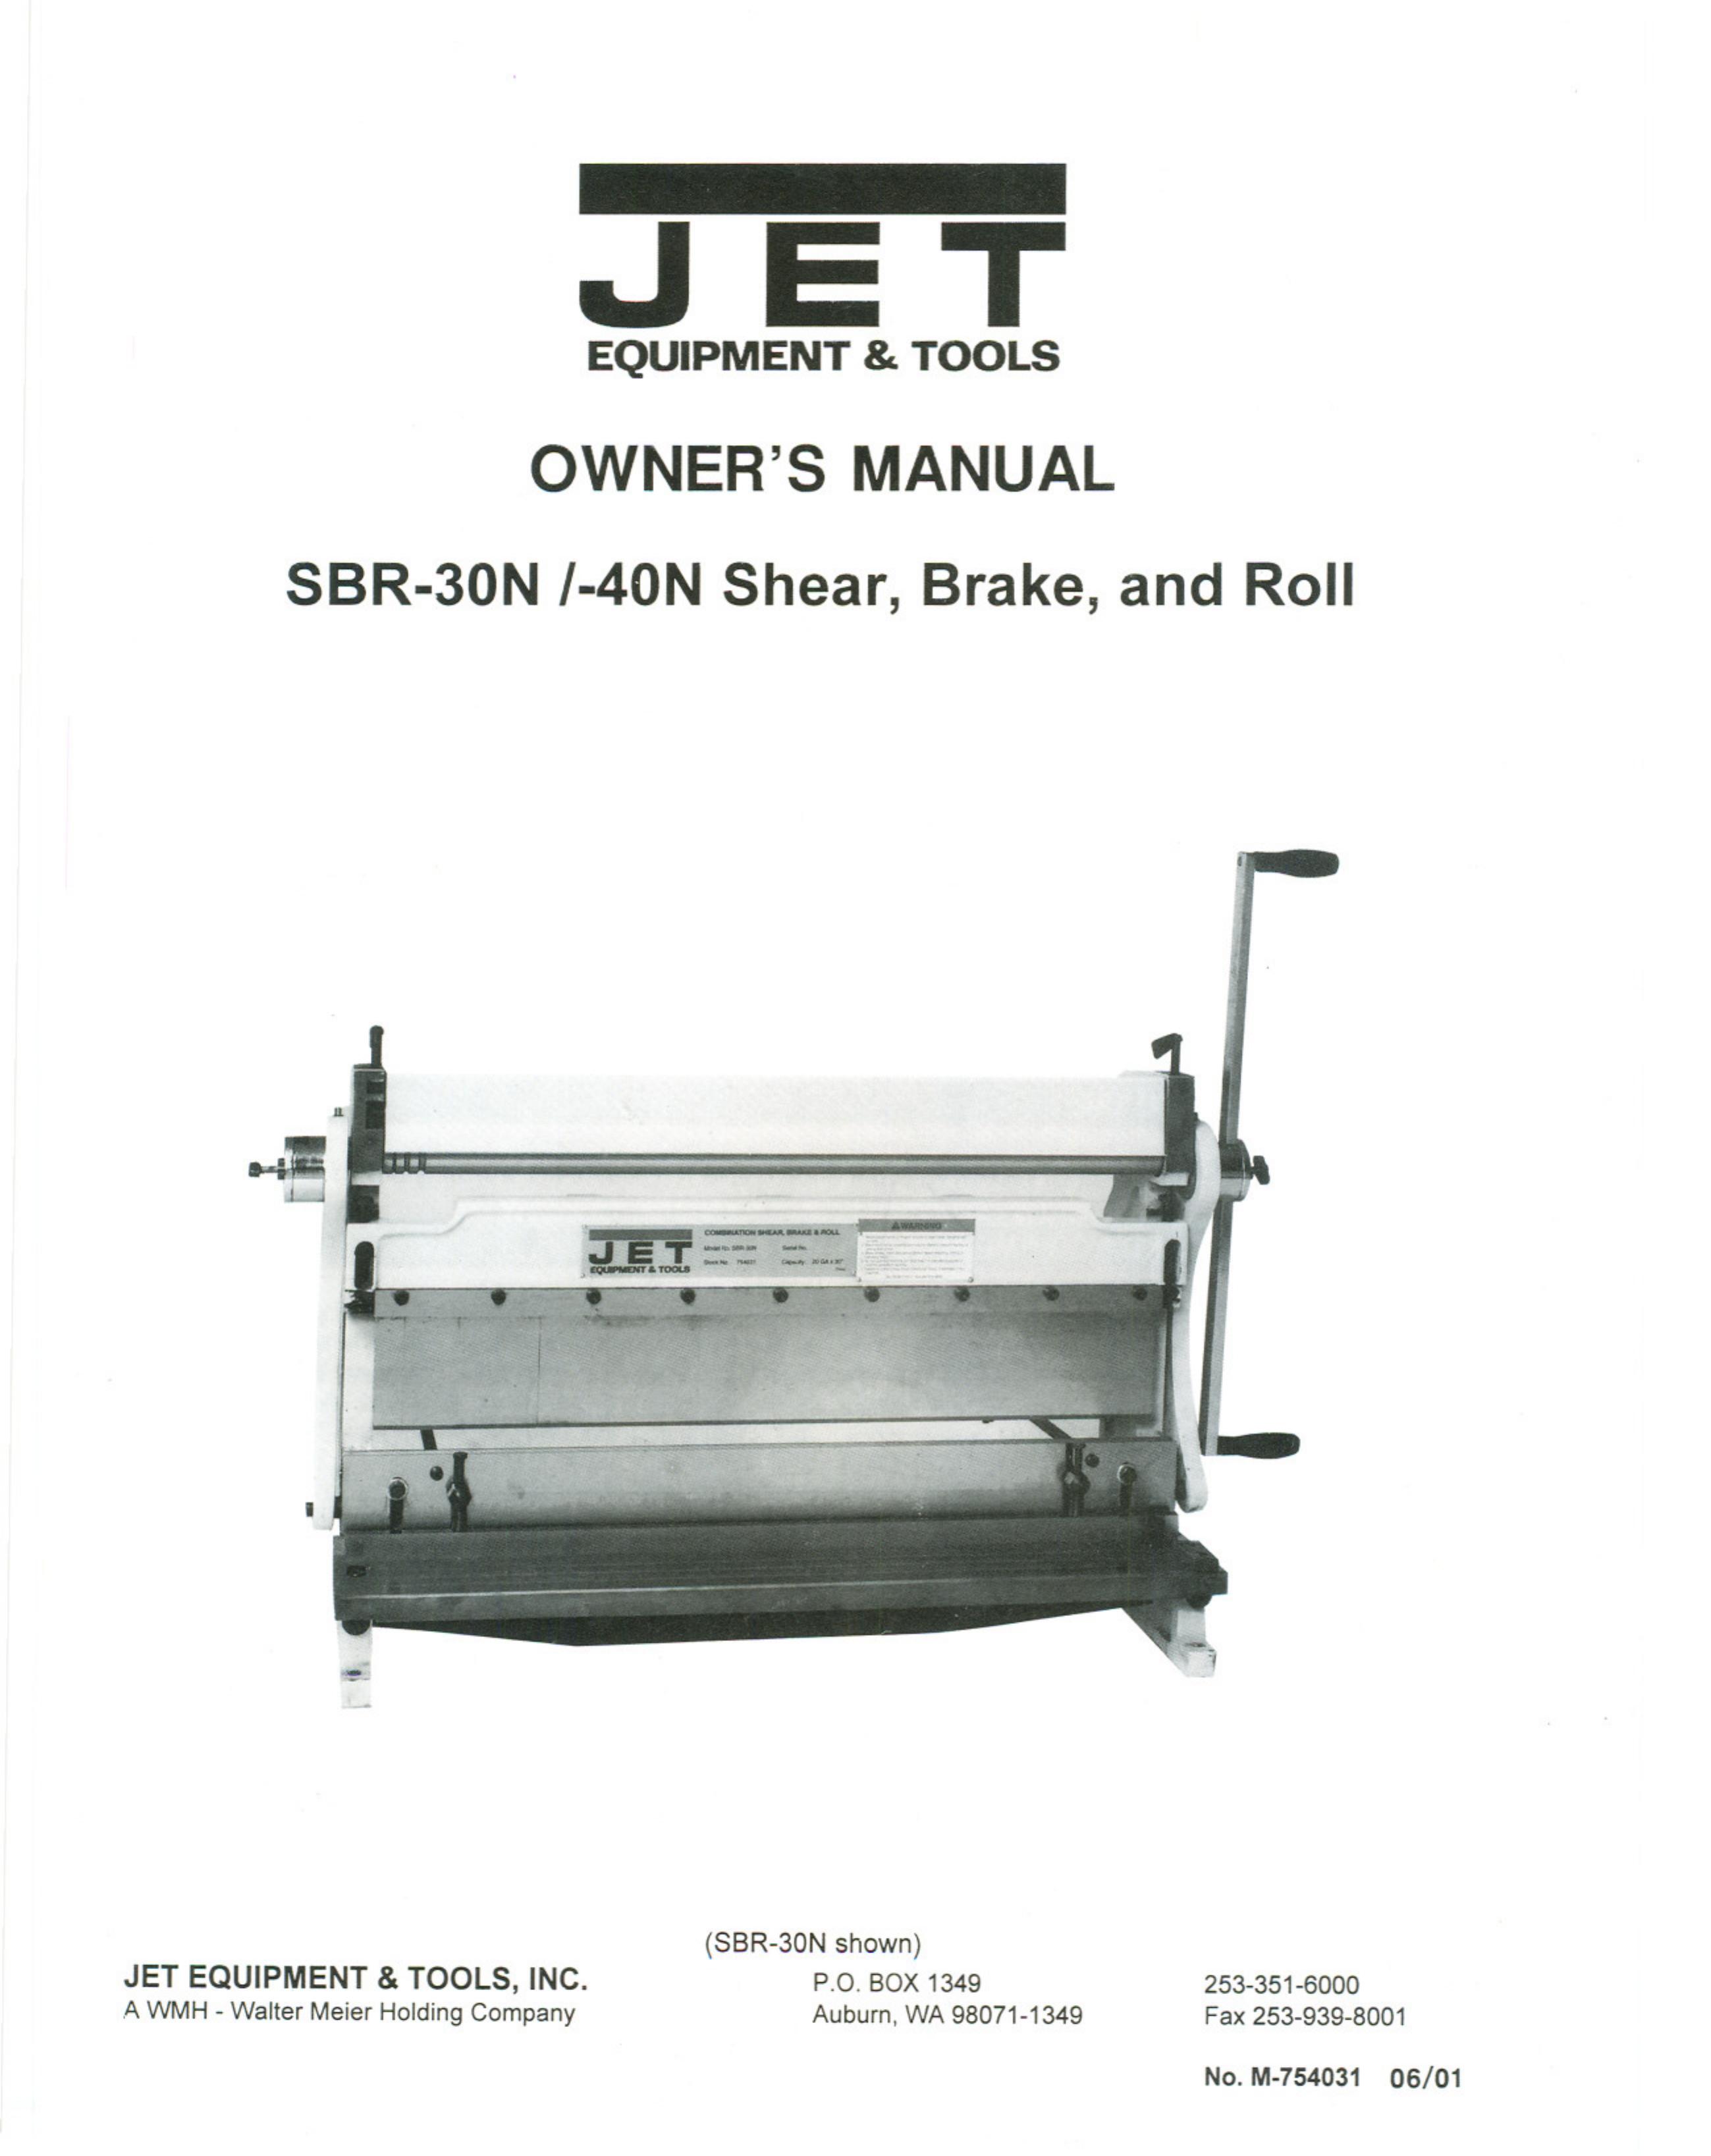 Jet Tools M-754031 06/01 Trimmer User Manual